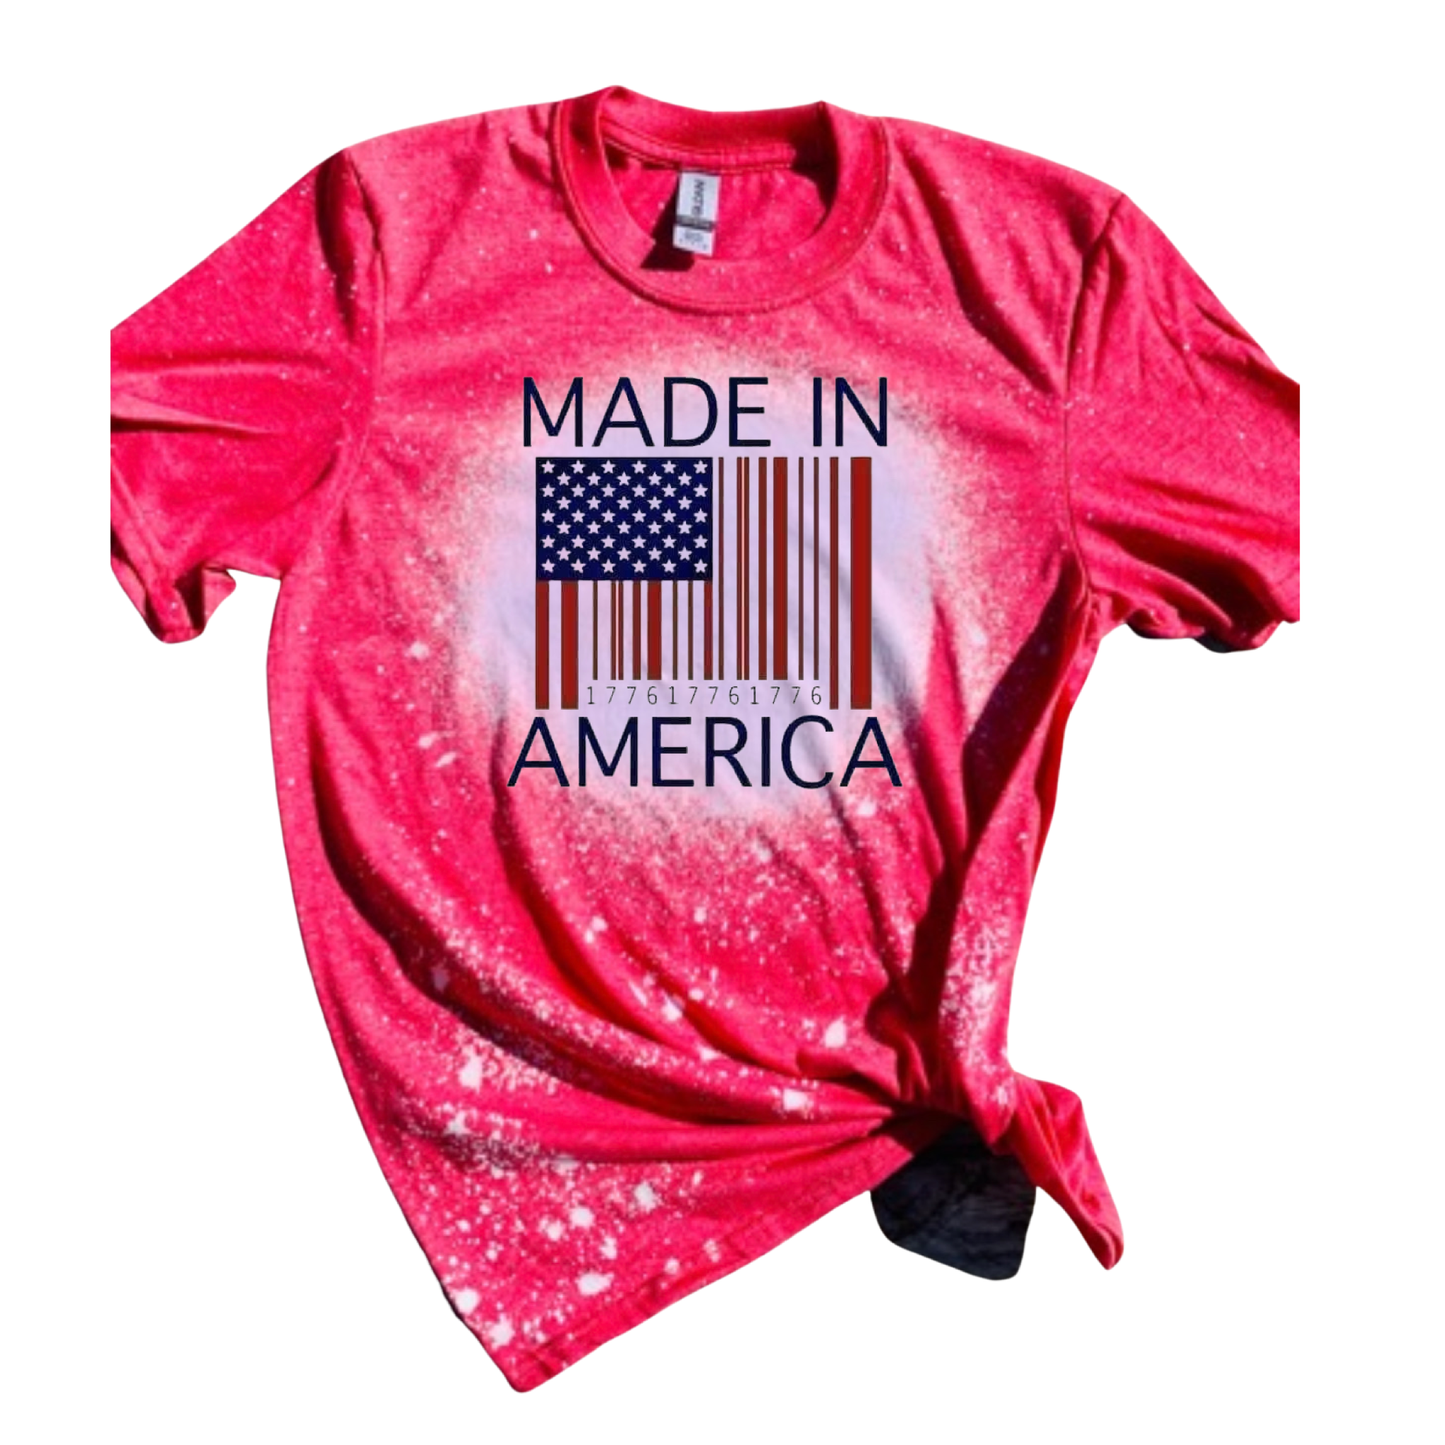 Made in America 🇺🇸